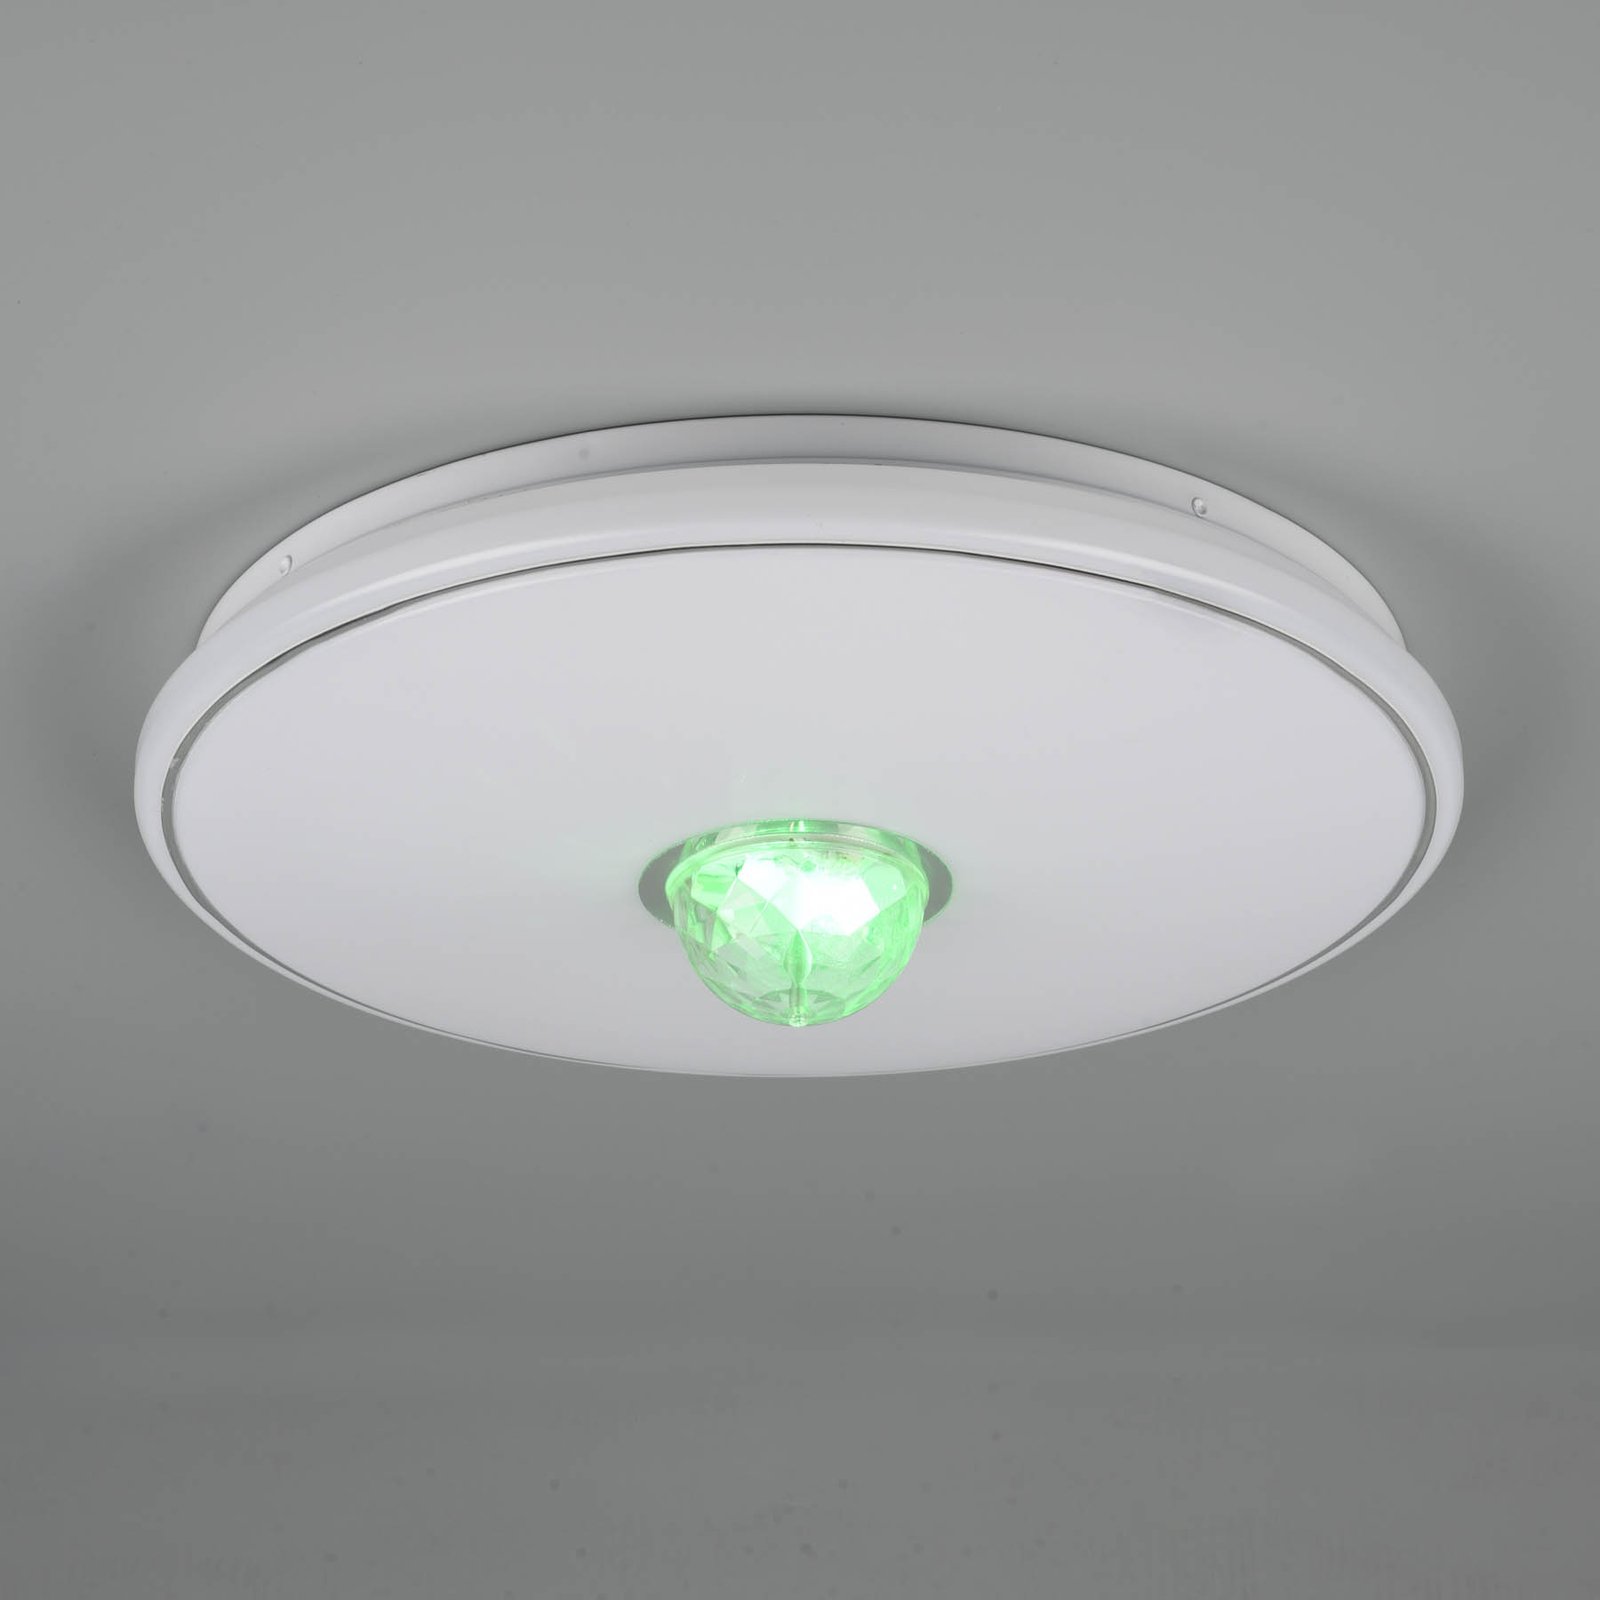 LED plafondlamp Rave afstandsbediening dimbaar RGB